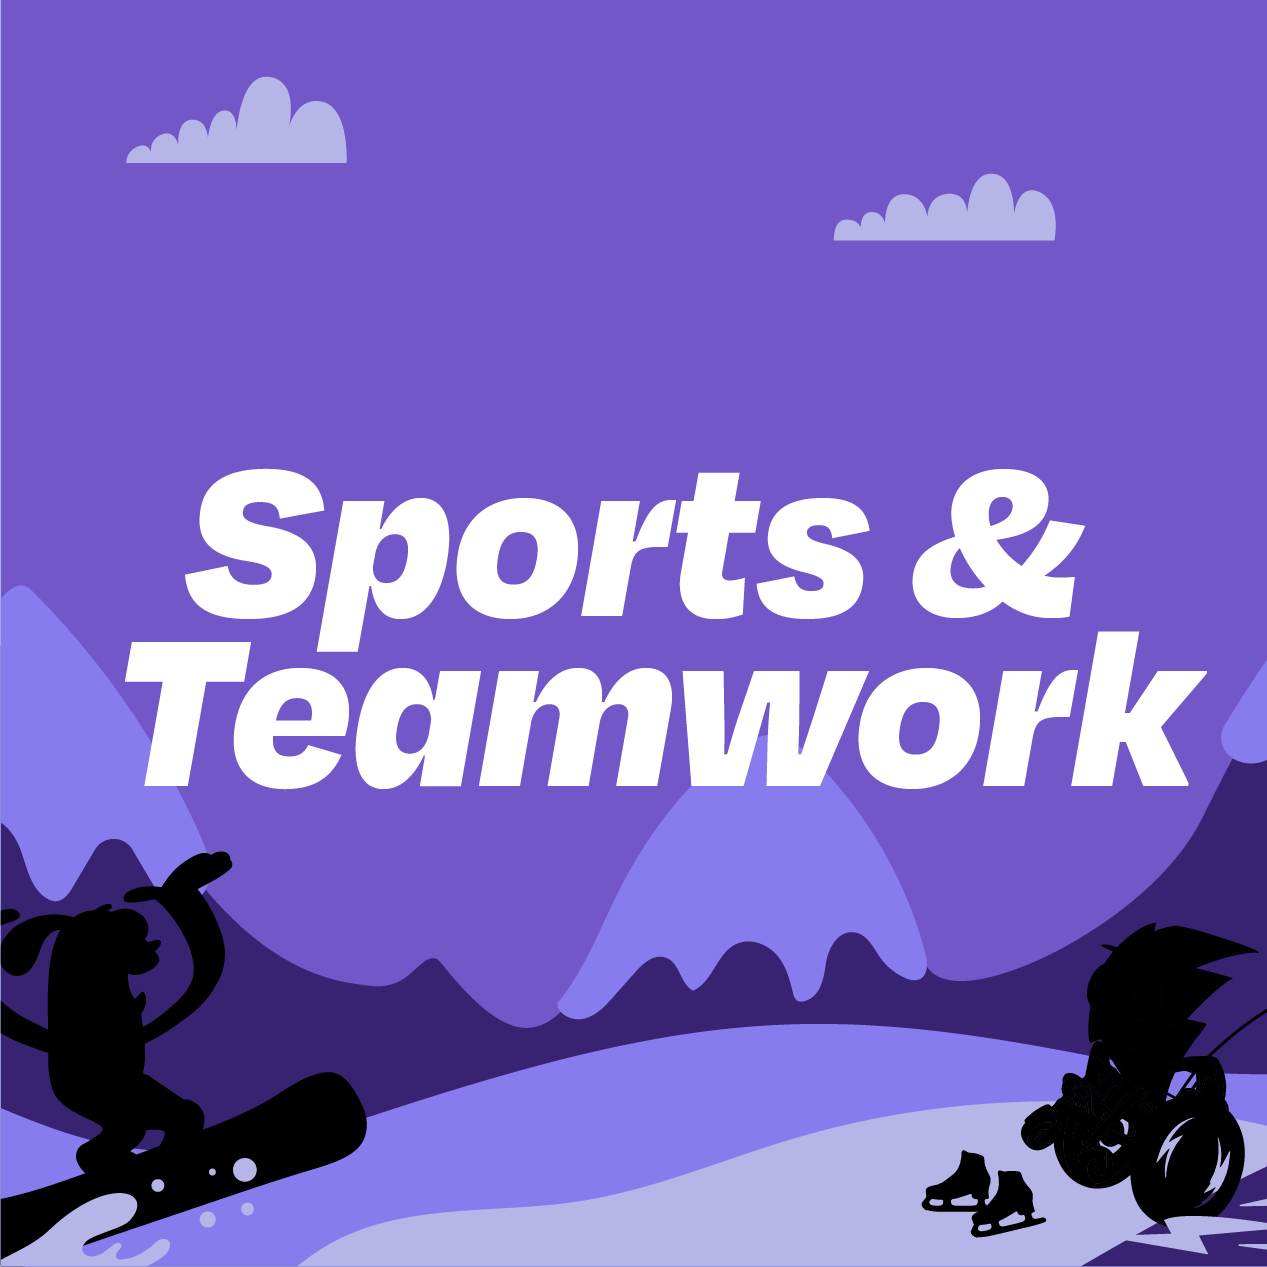 Sports and Teamwork